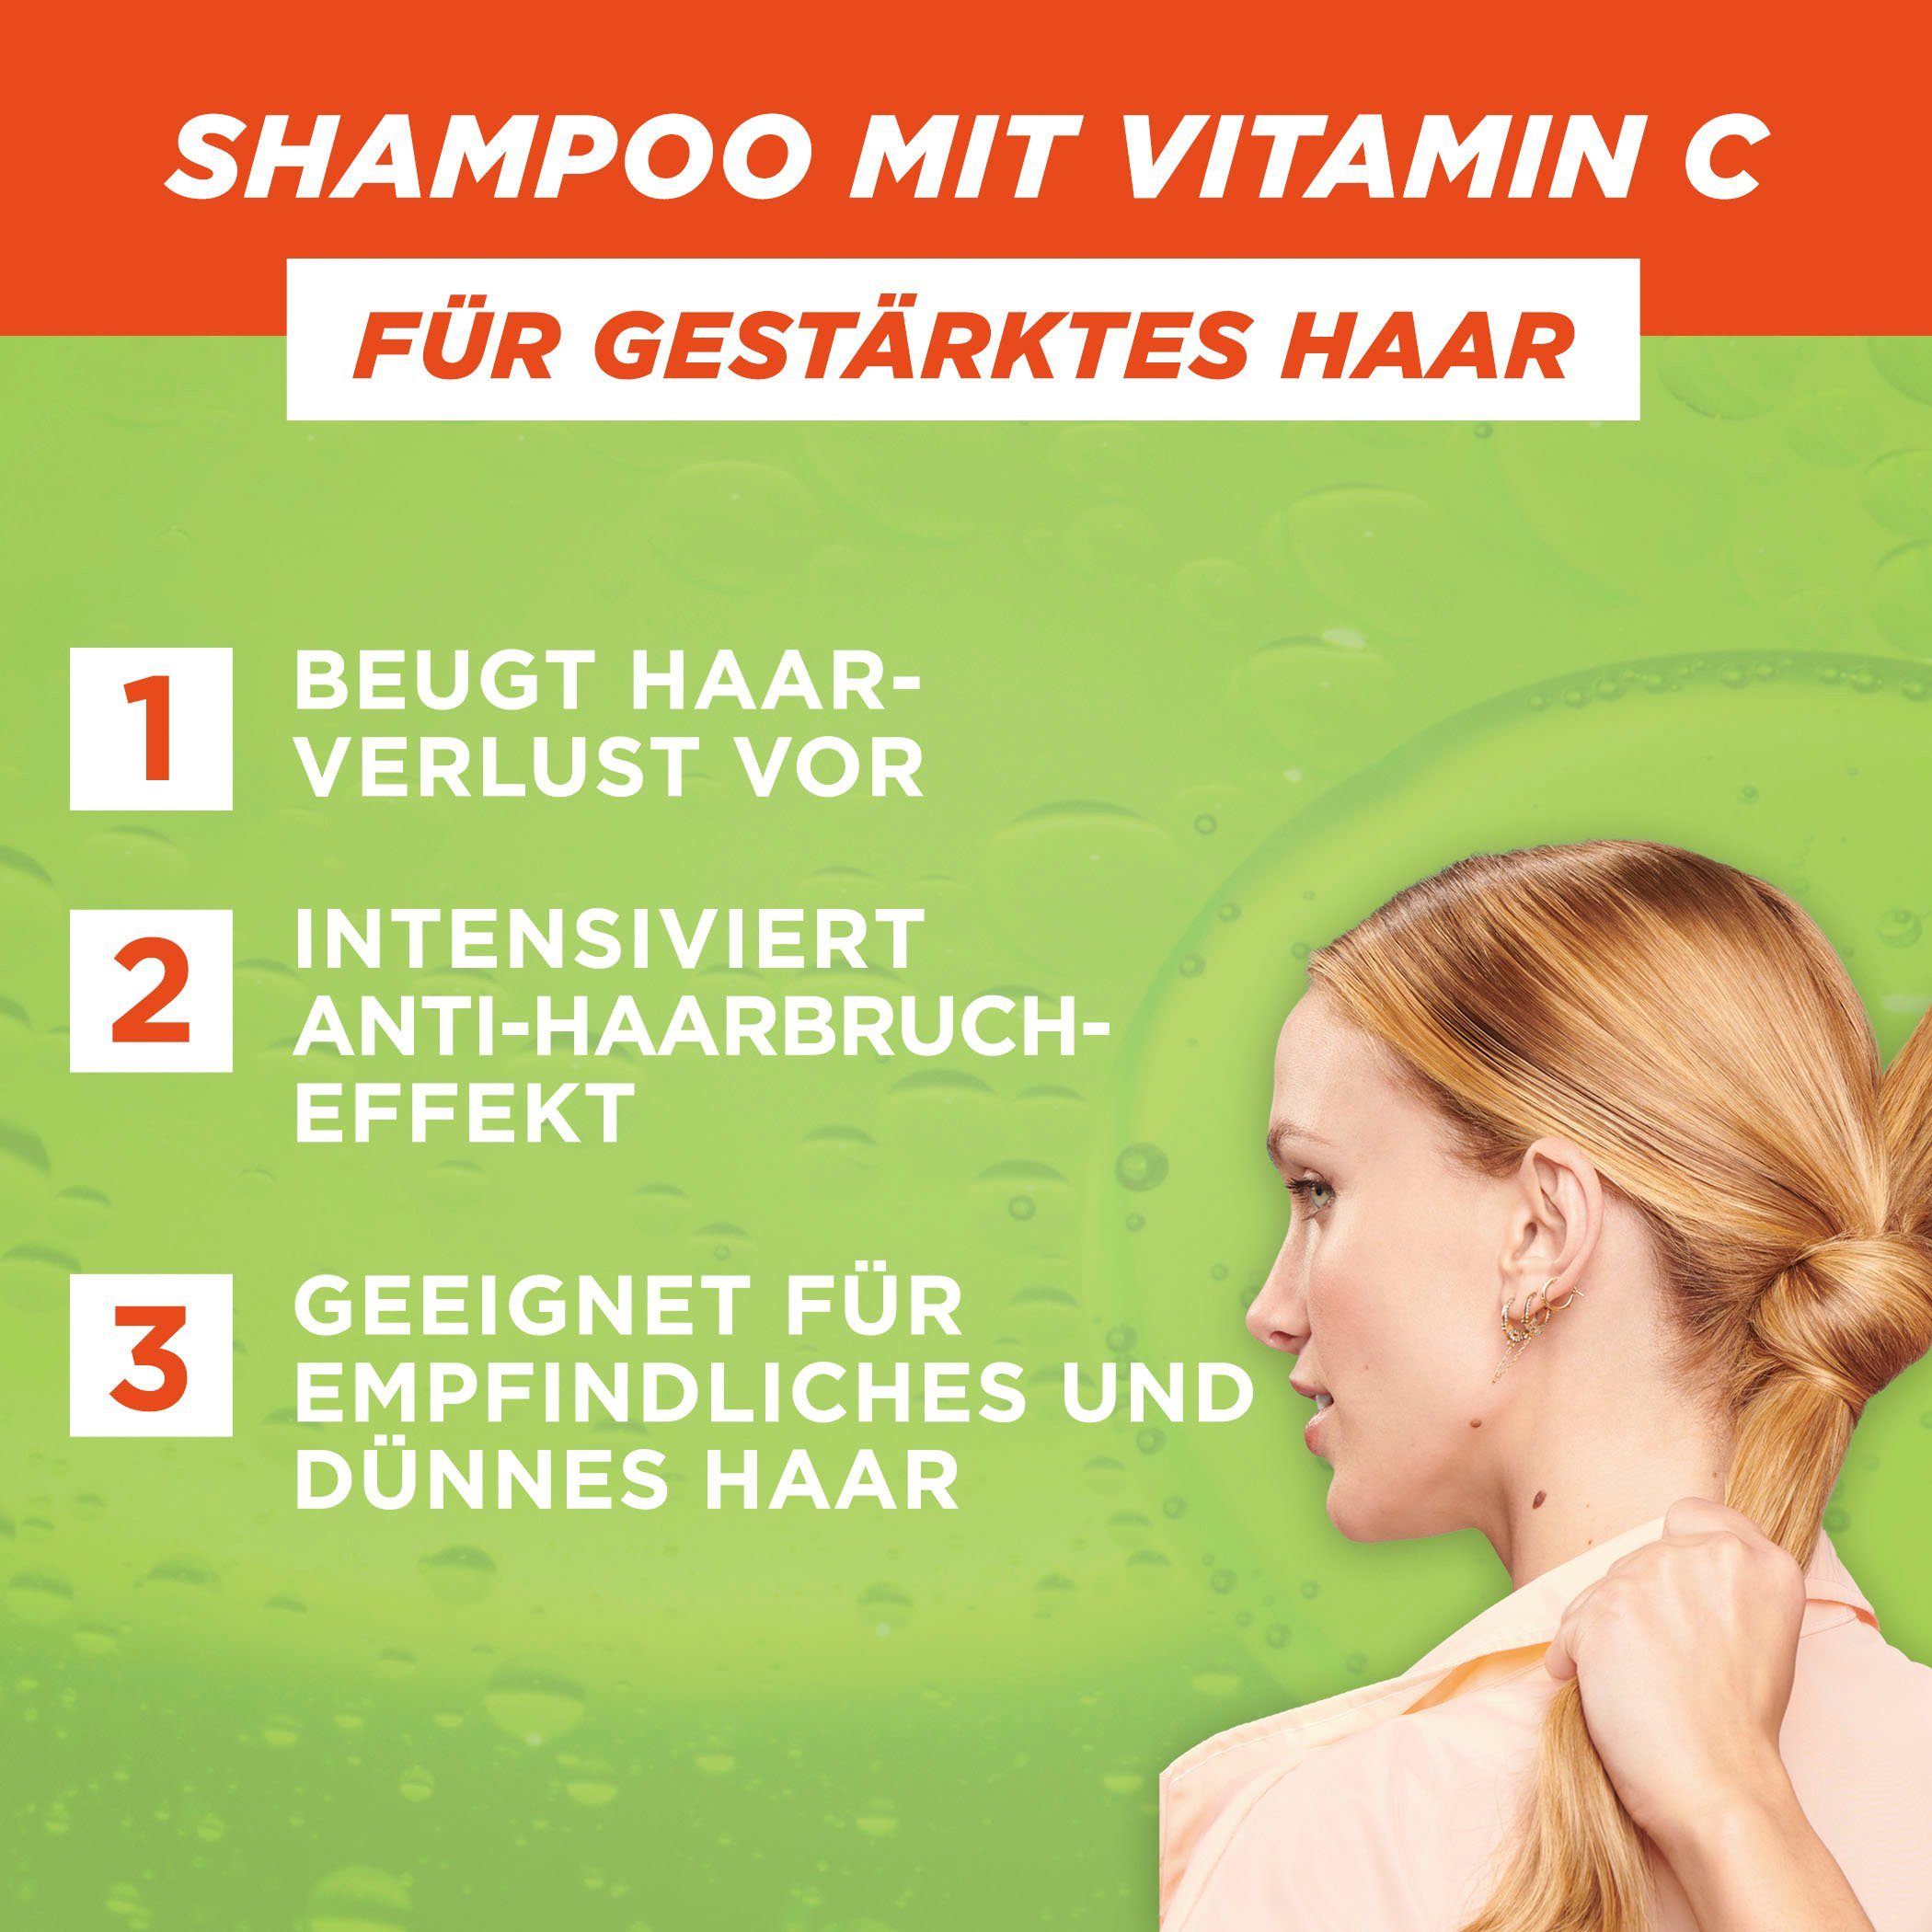 Set, Fructis GARNIER Kraft Garnier Haarshampoo & Vitamine 6-tlg. Shampoo,